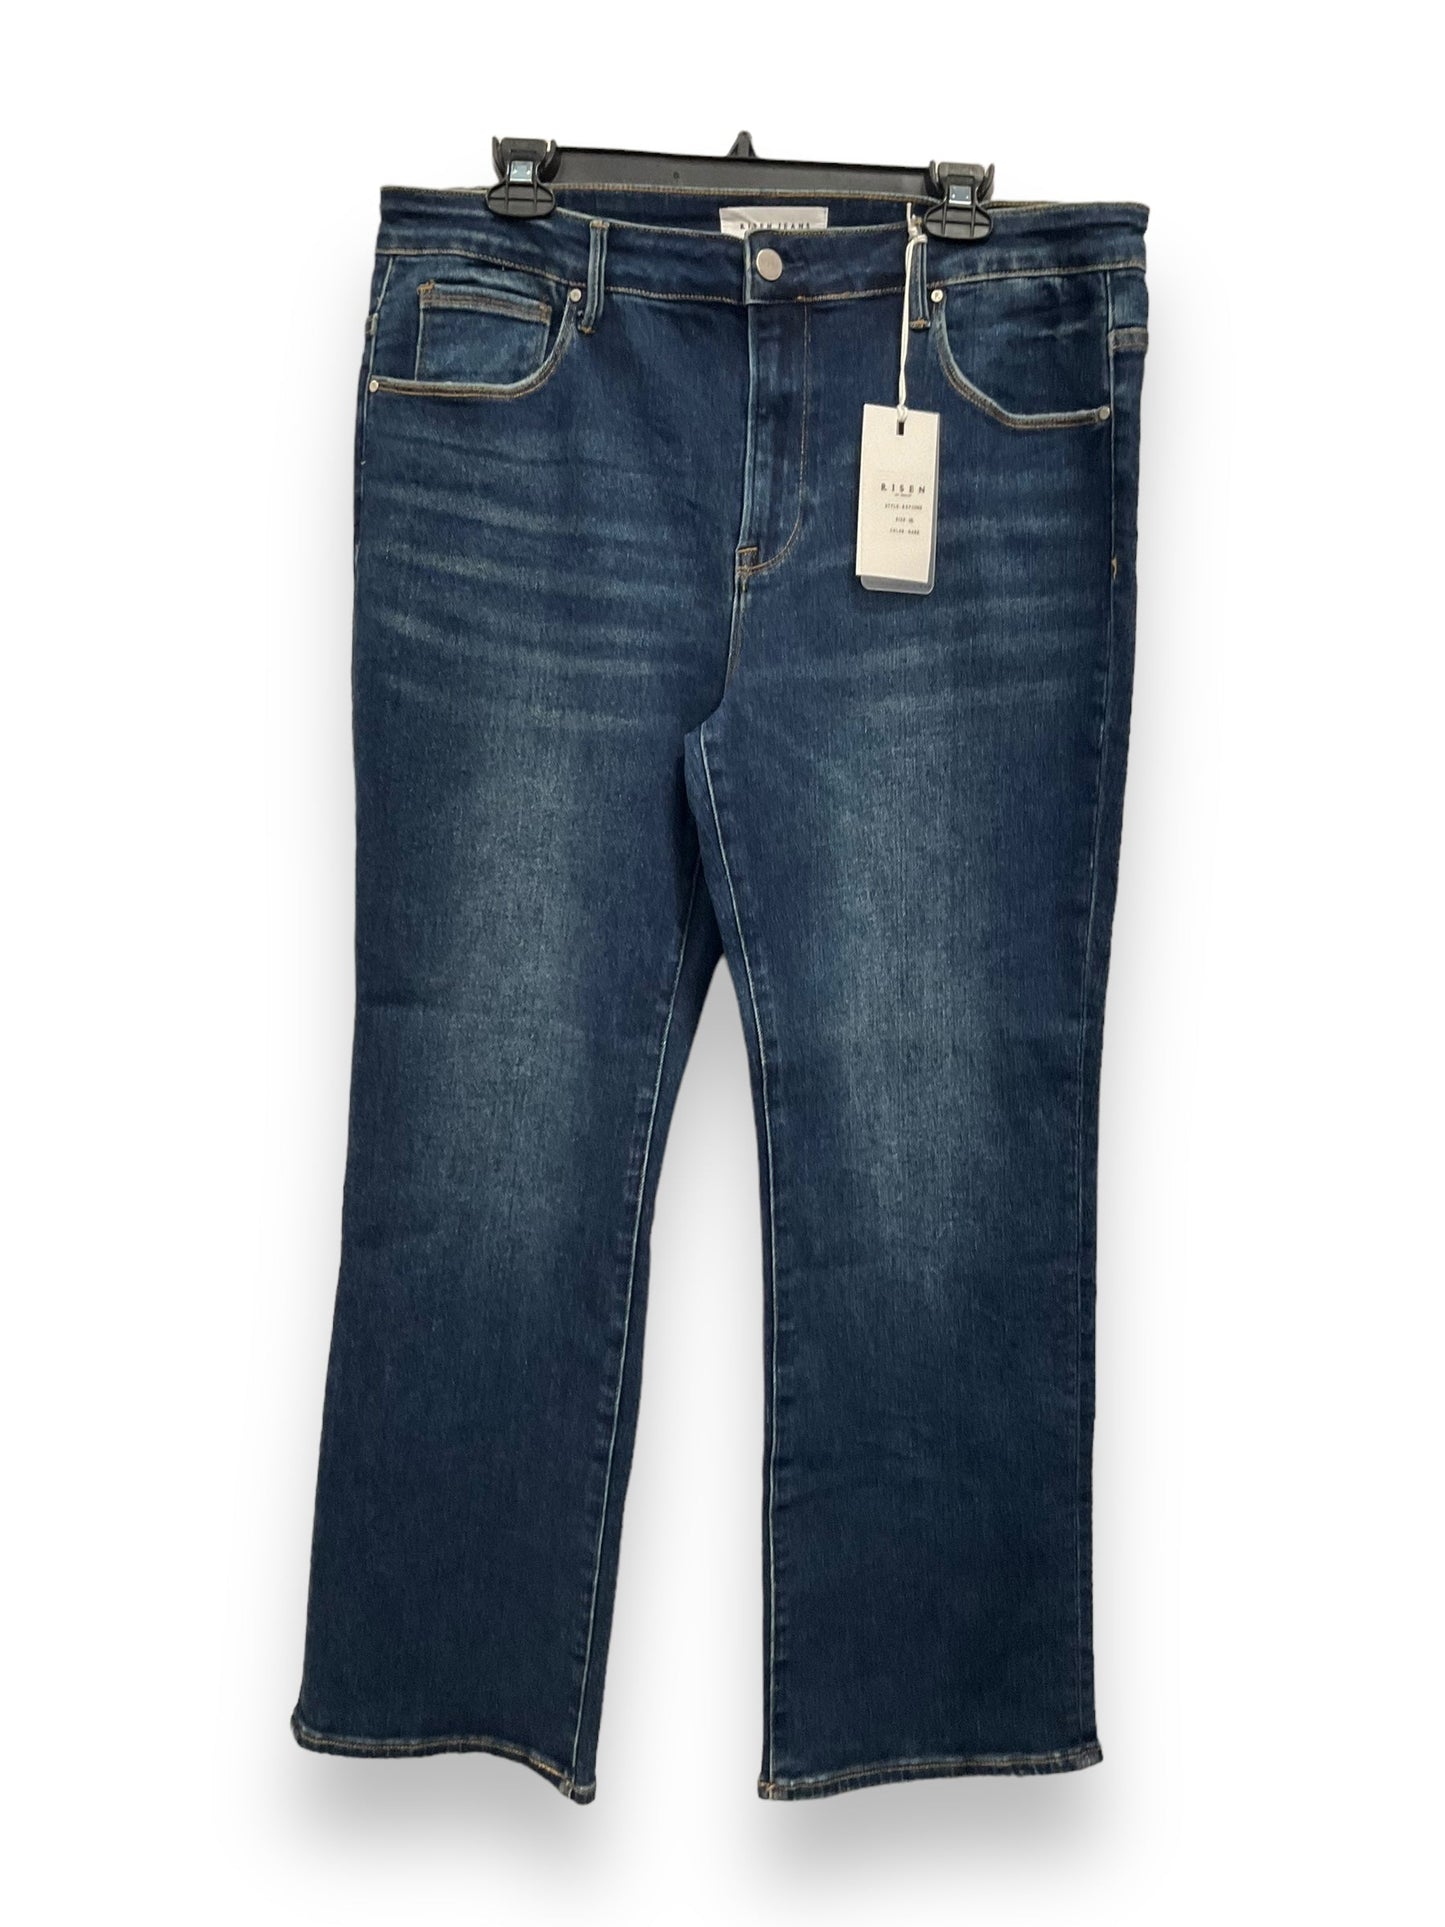 Blue Denim Jeans Cropped Risen, Size 1x